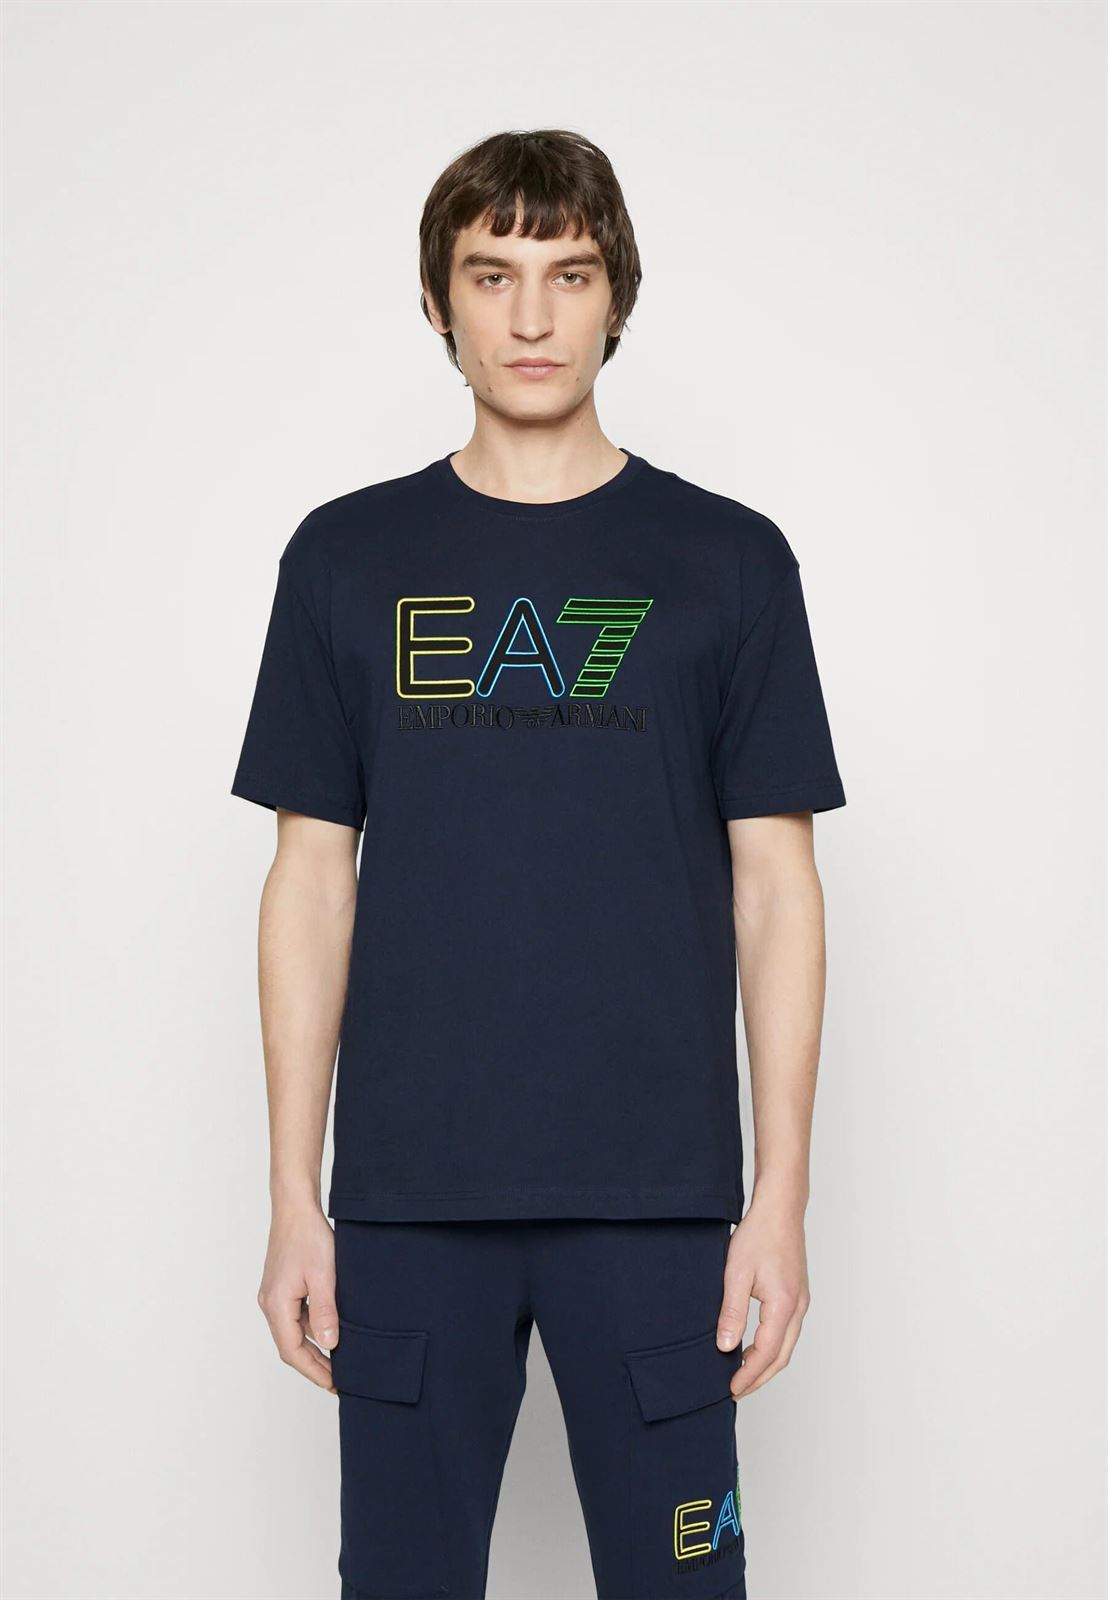 Camiseta EA7 Emporio Armani 3RUT02 PJ02Z 1554 navy blue - Imagen 1